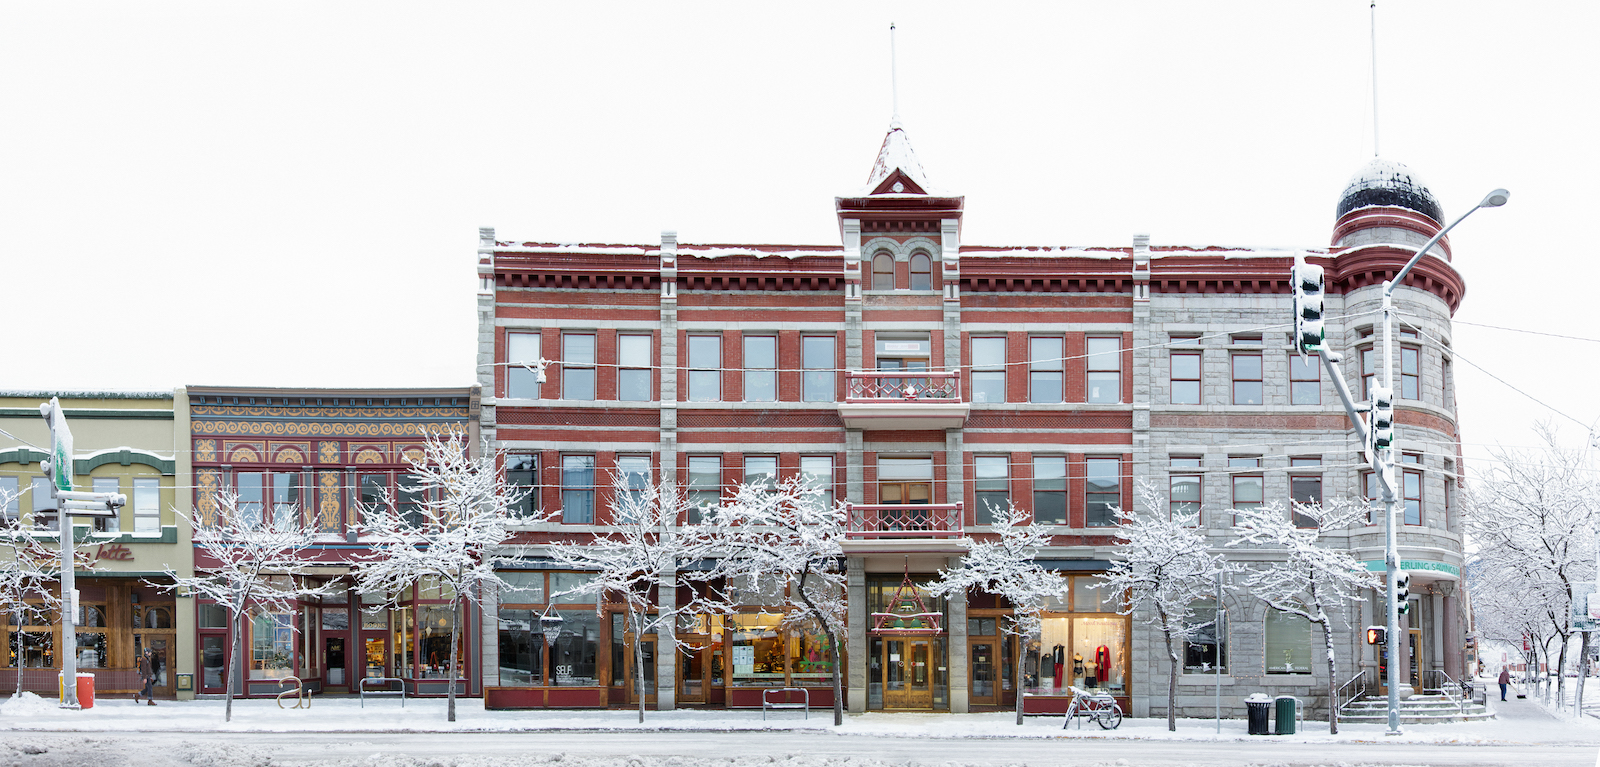 Downtown Missoula Partnership  in Western Montana